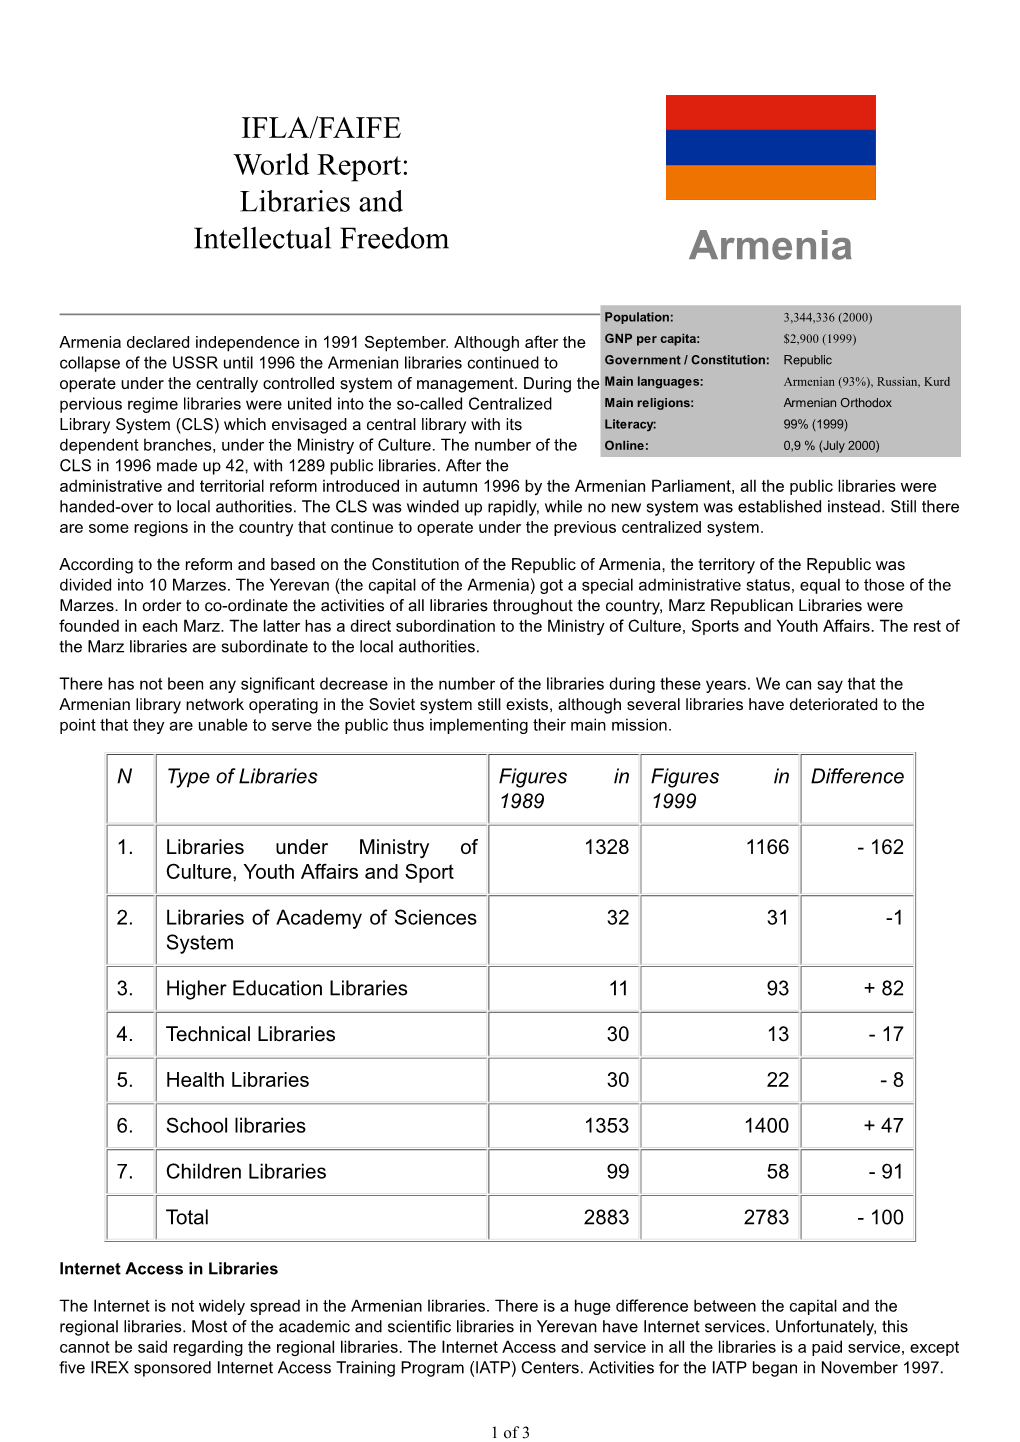 FAIFE World Report: Armenia